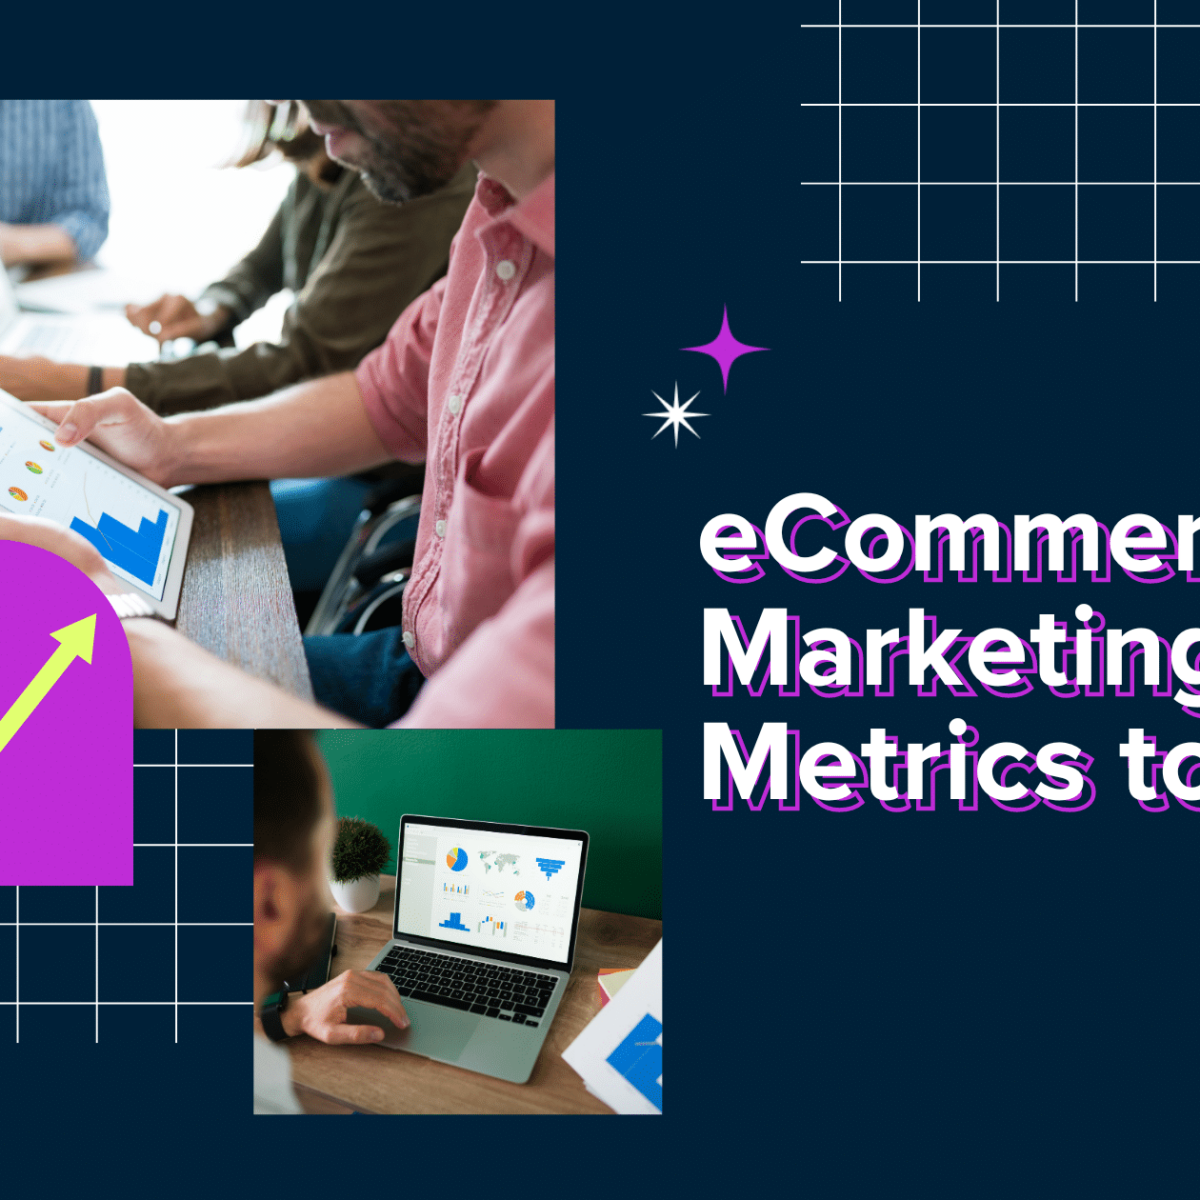 ecommerce marketing metrics to watch blog